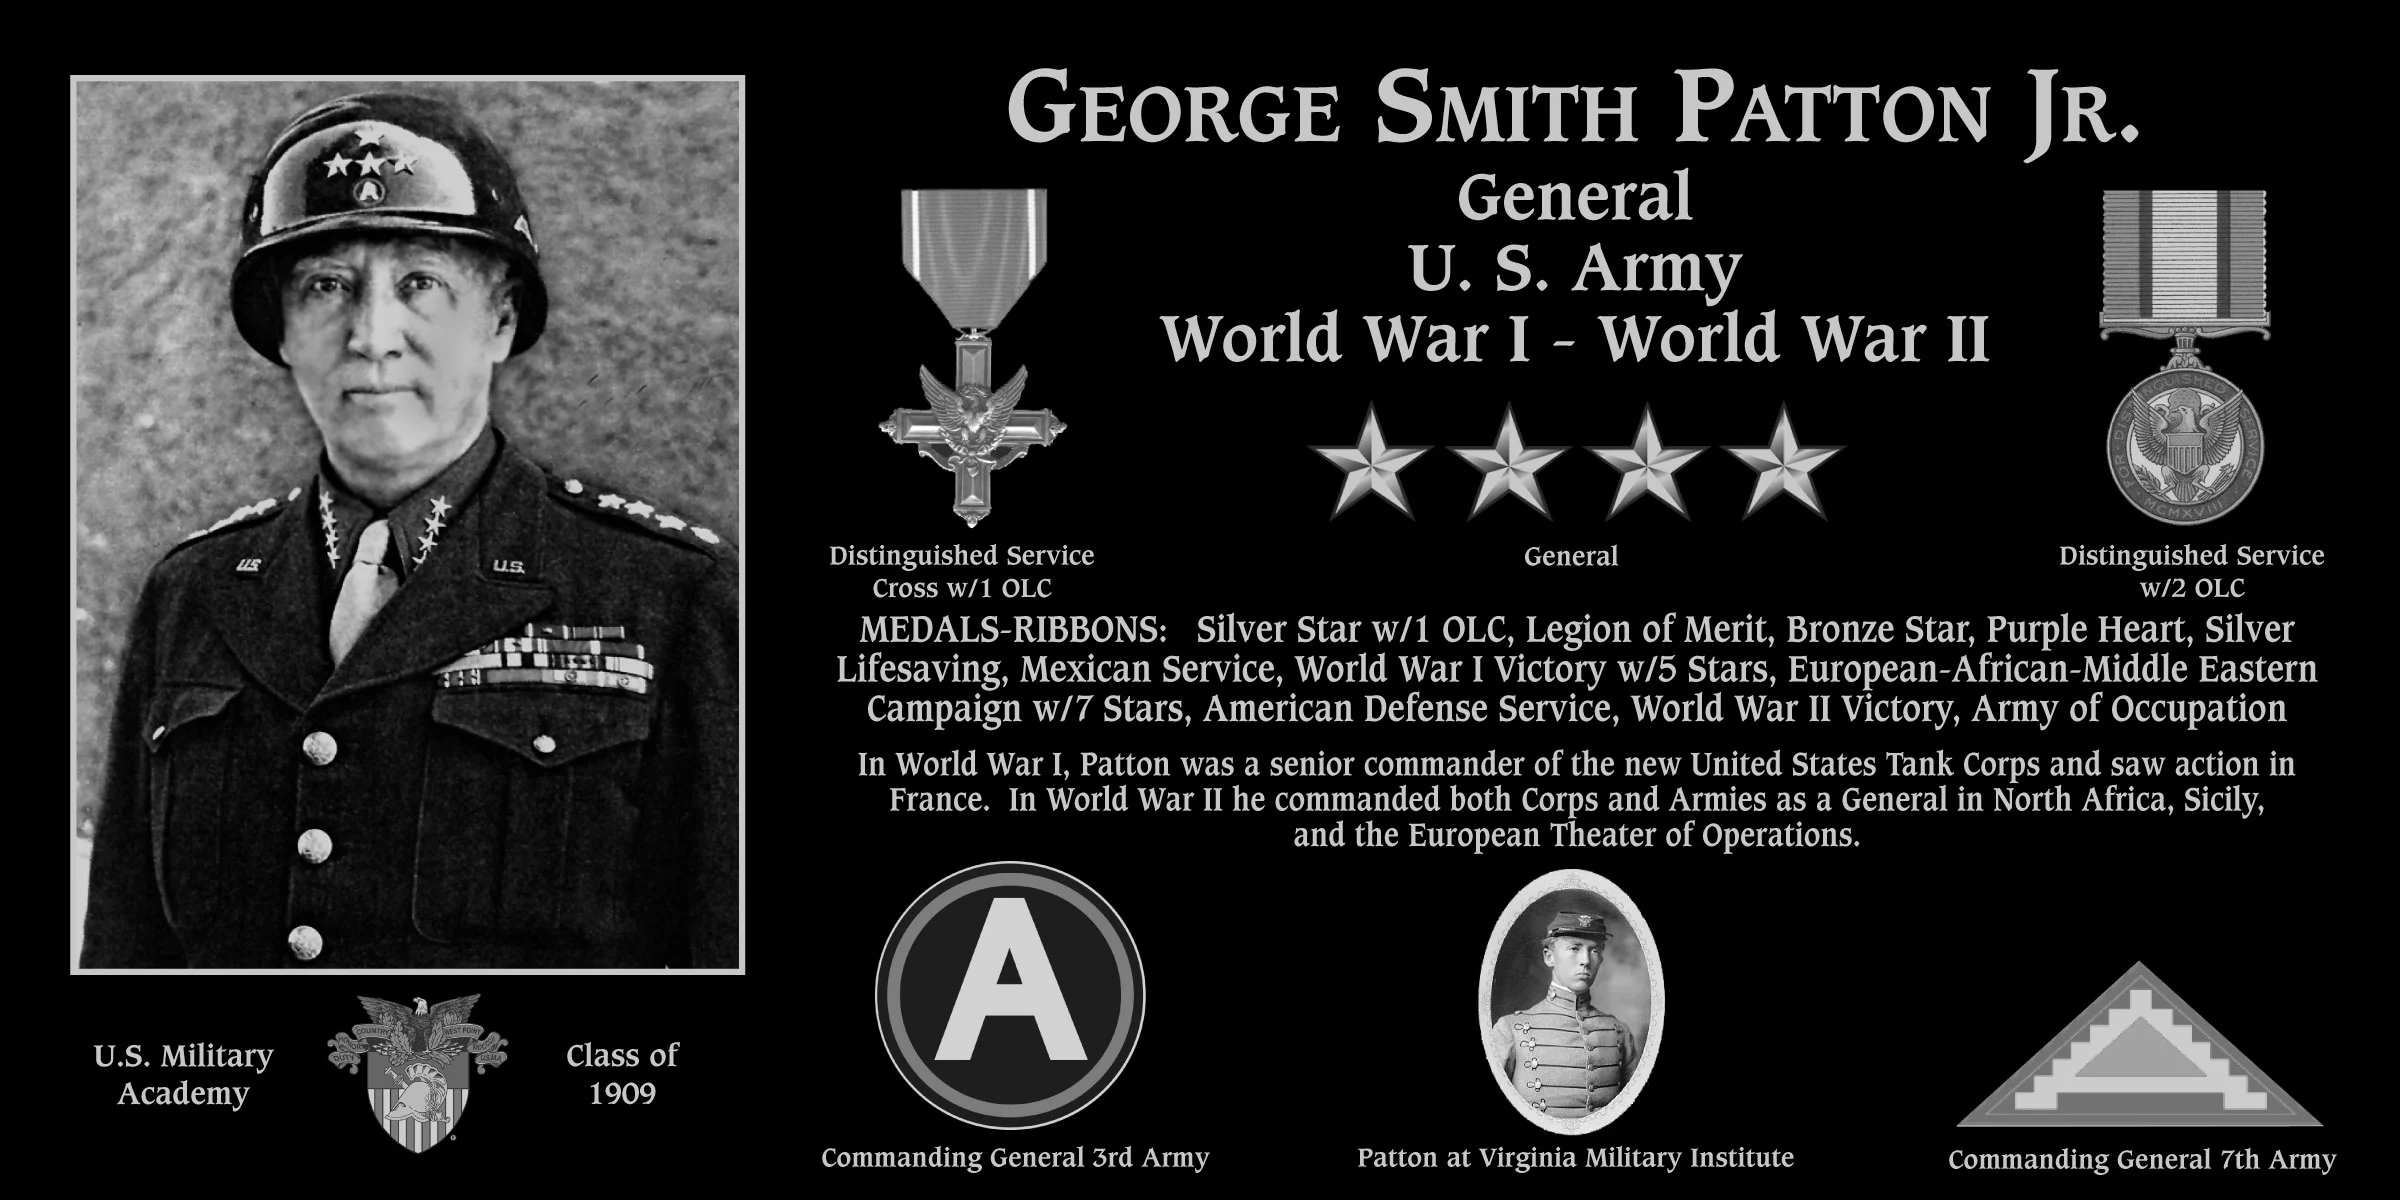 George Smith Patton, jr